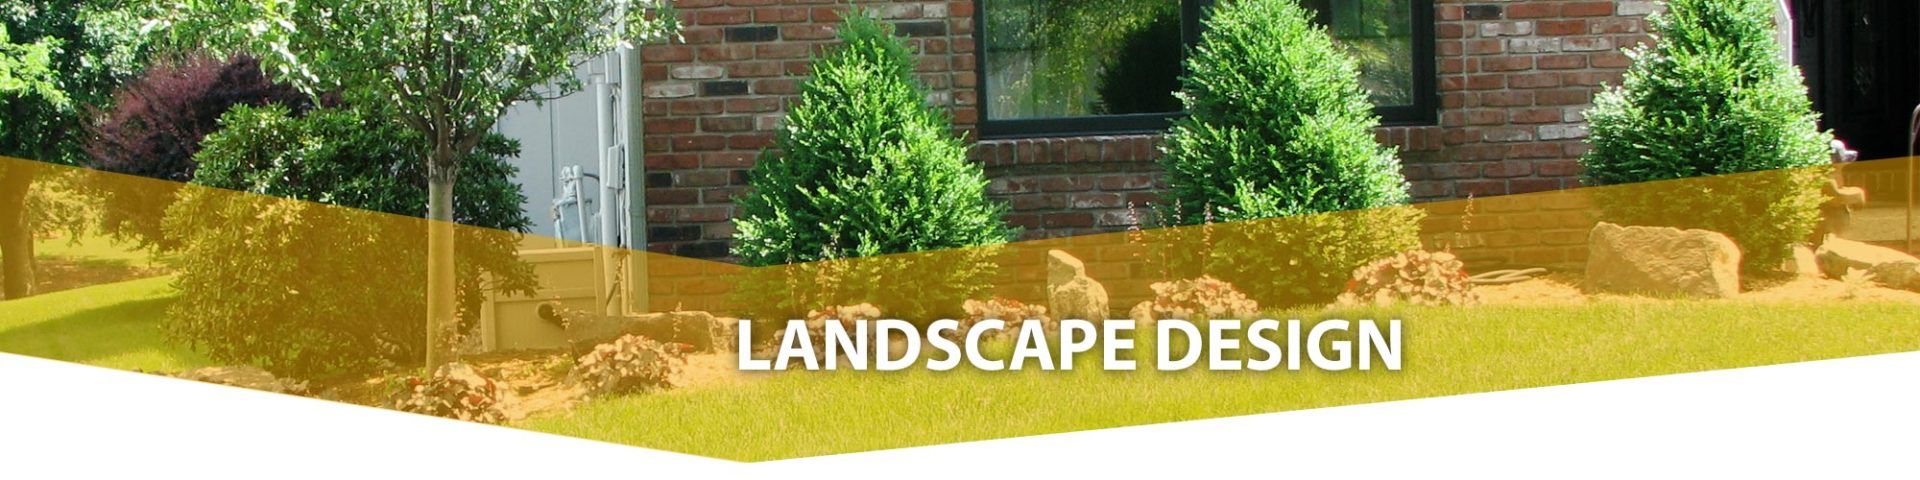 Landscape Design Services in Bloomington, IL